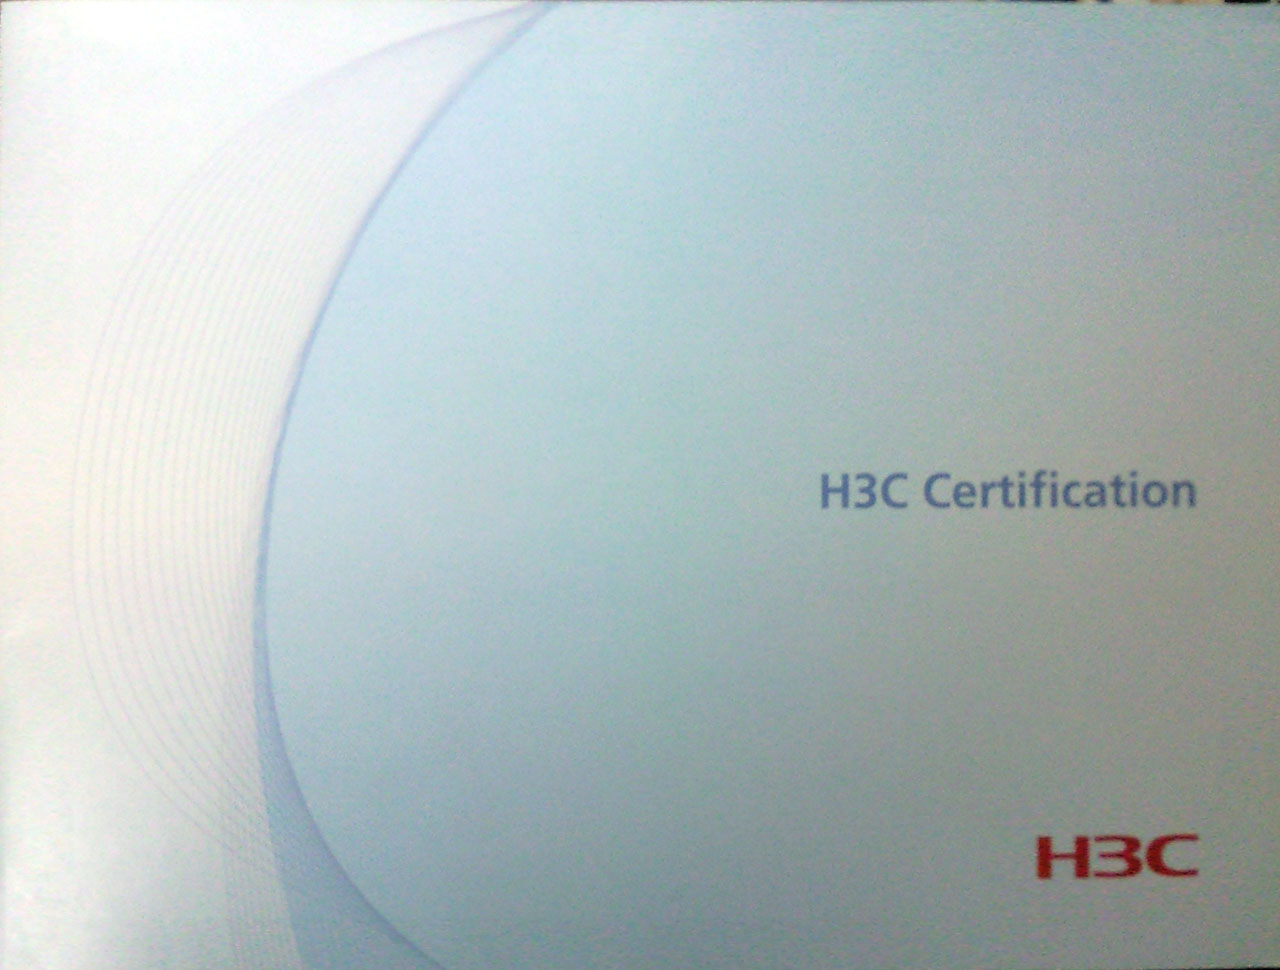 H3C认证网络工程师证书样本